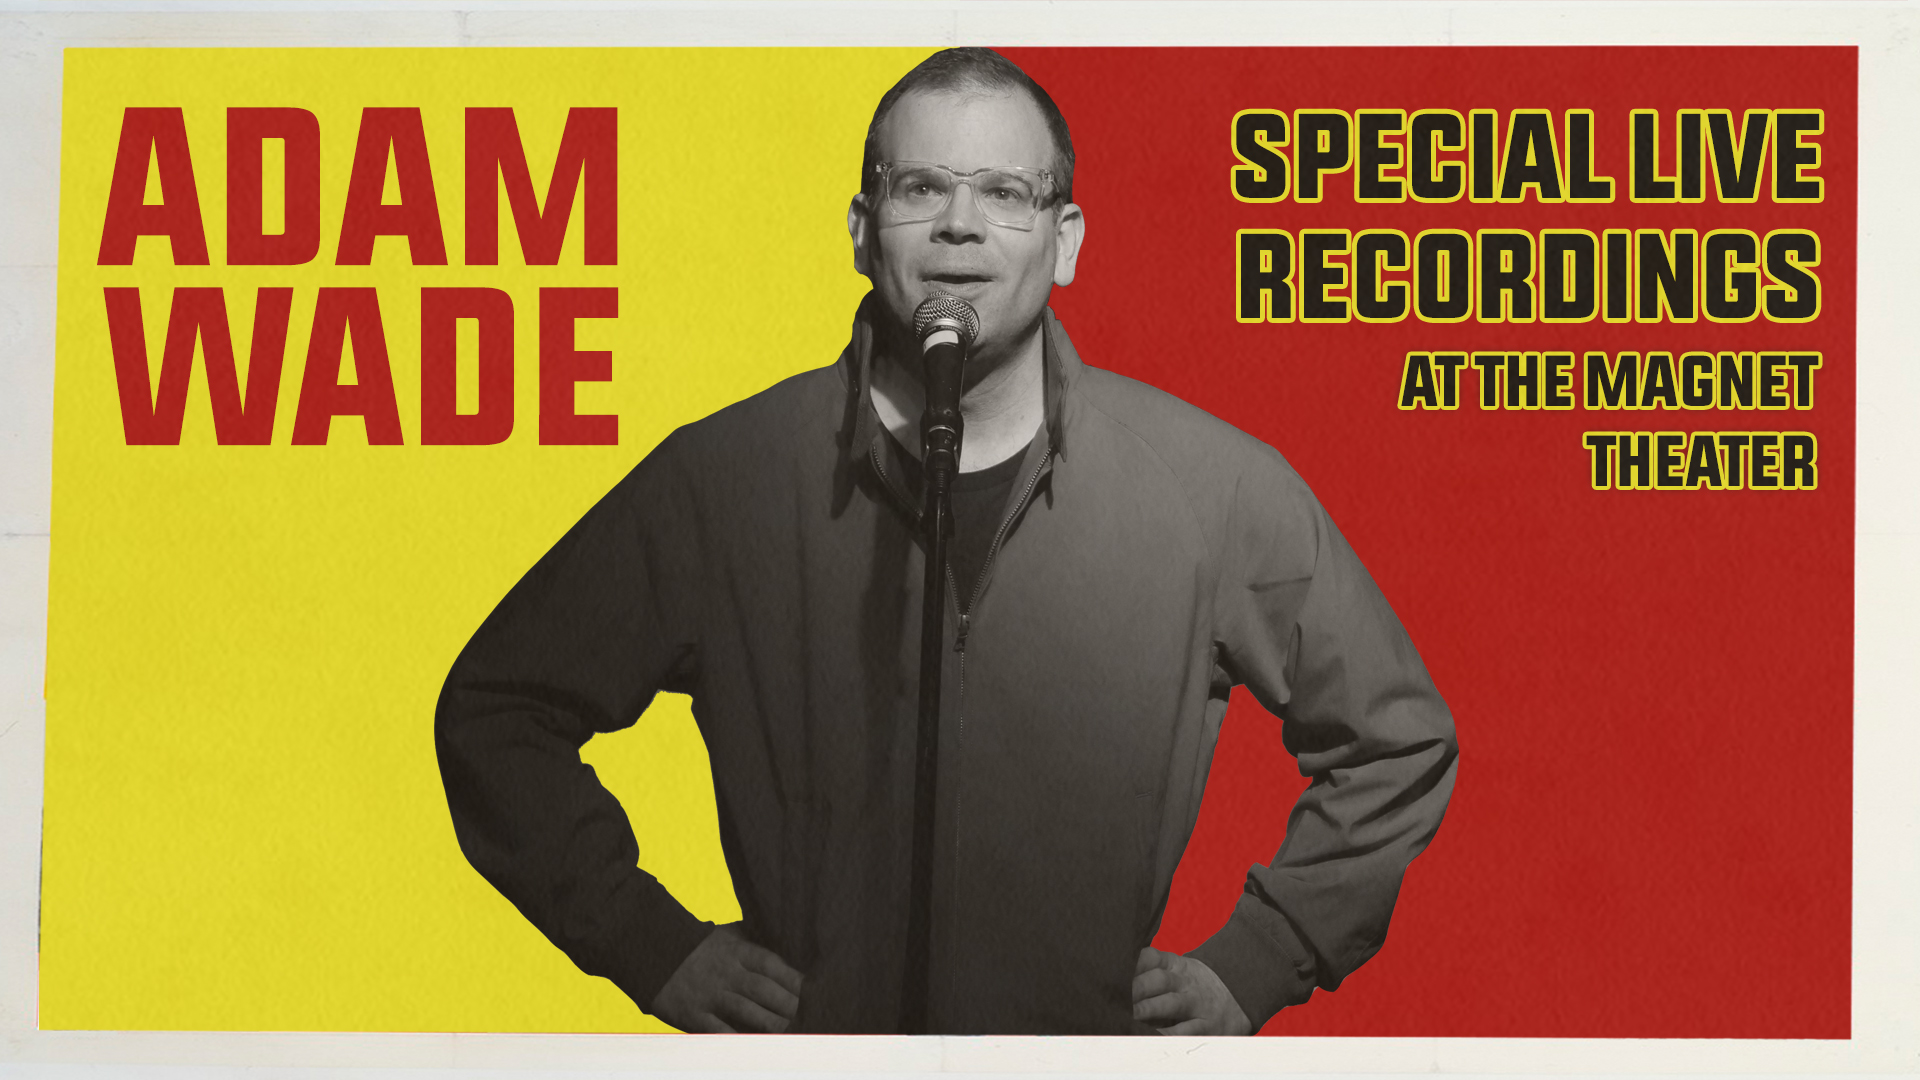 Adam Wade Special Live Recording